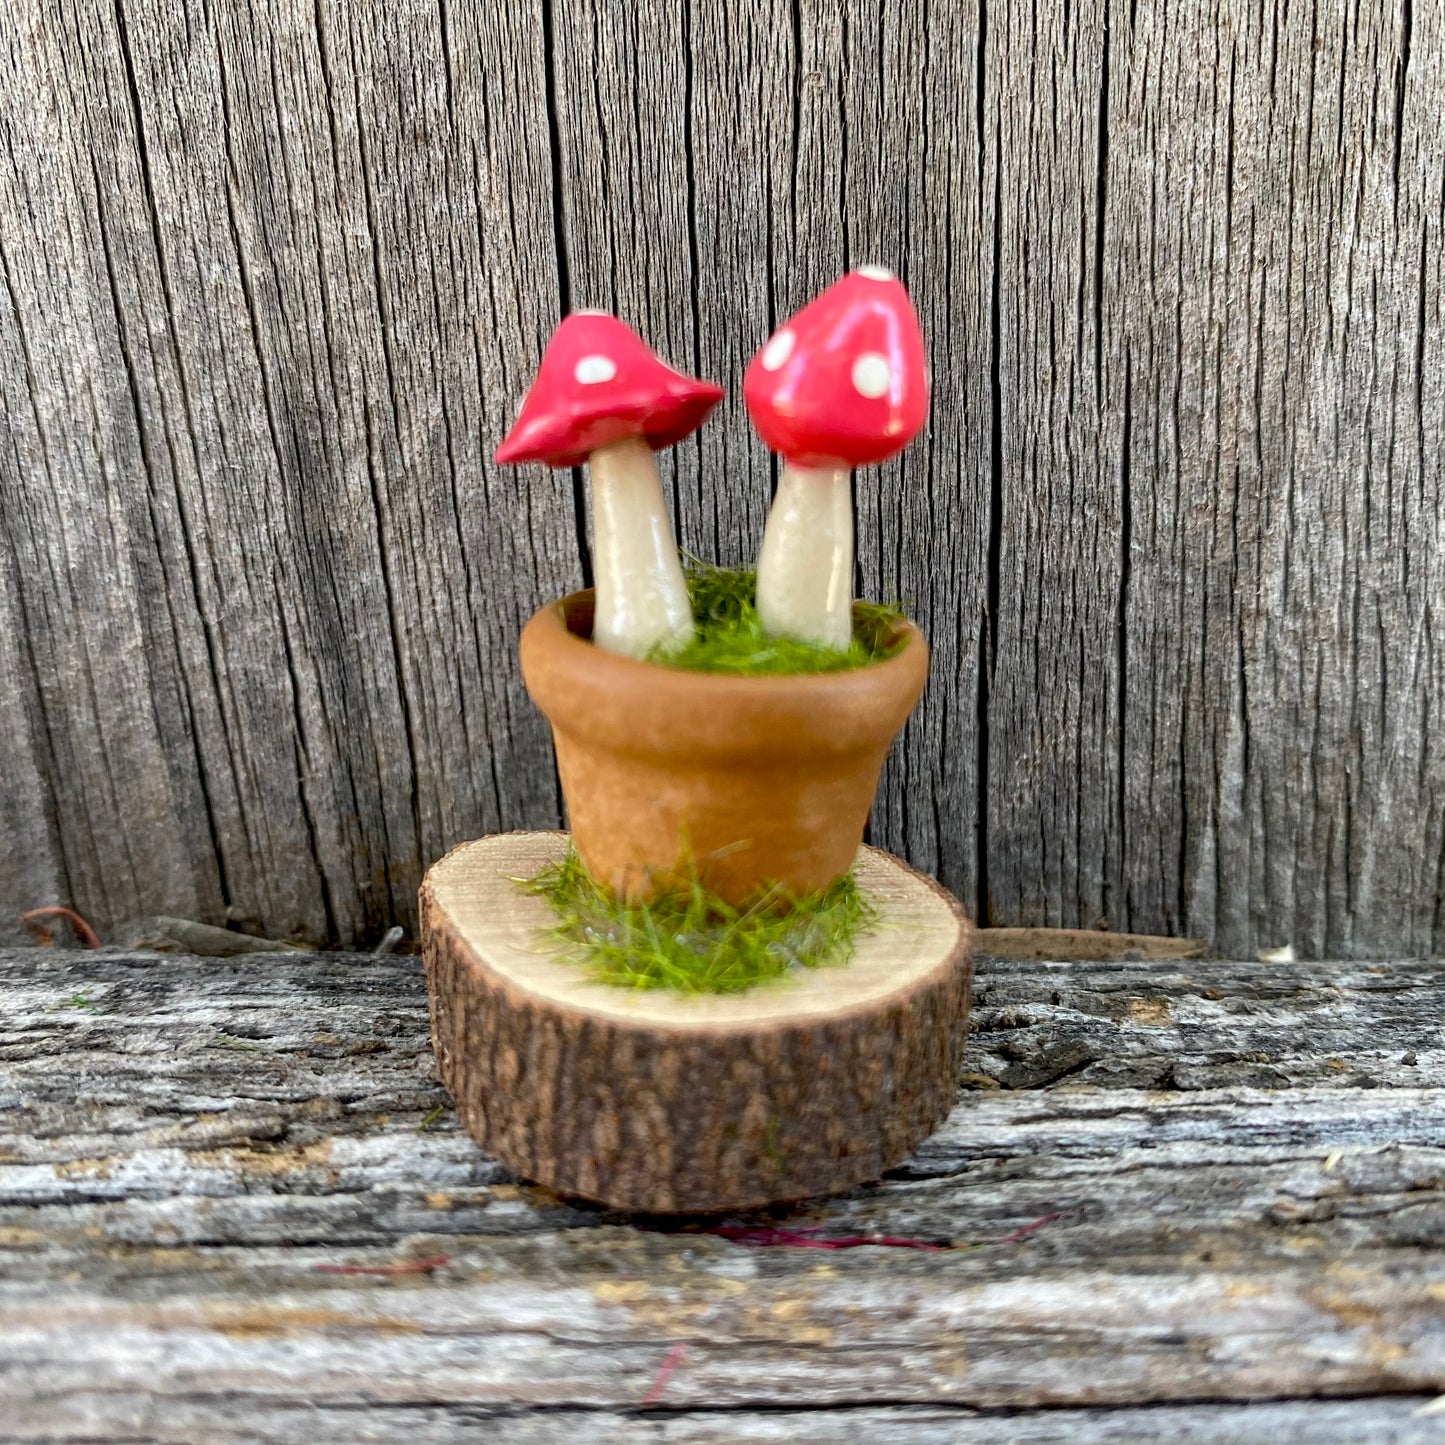 Fairy Garden Miniature Pot And Mushrooms